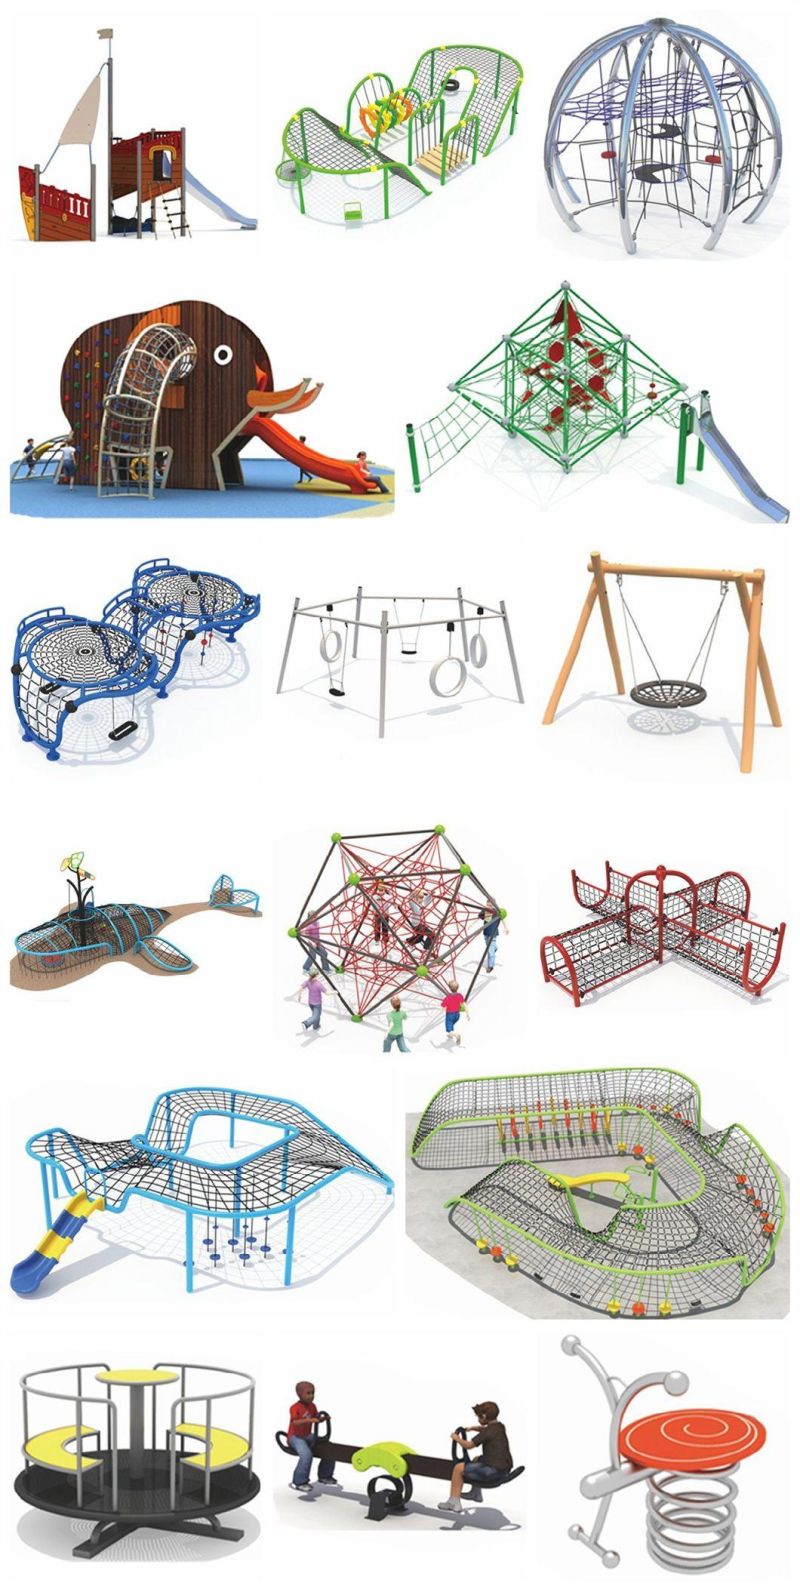 Outdoor Park Kids Playground Equipment Space Series Climbing Slide Yq31